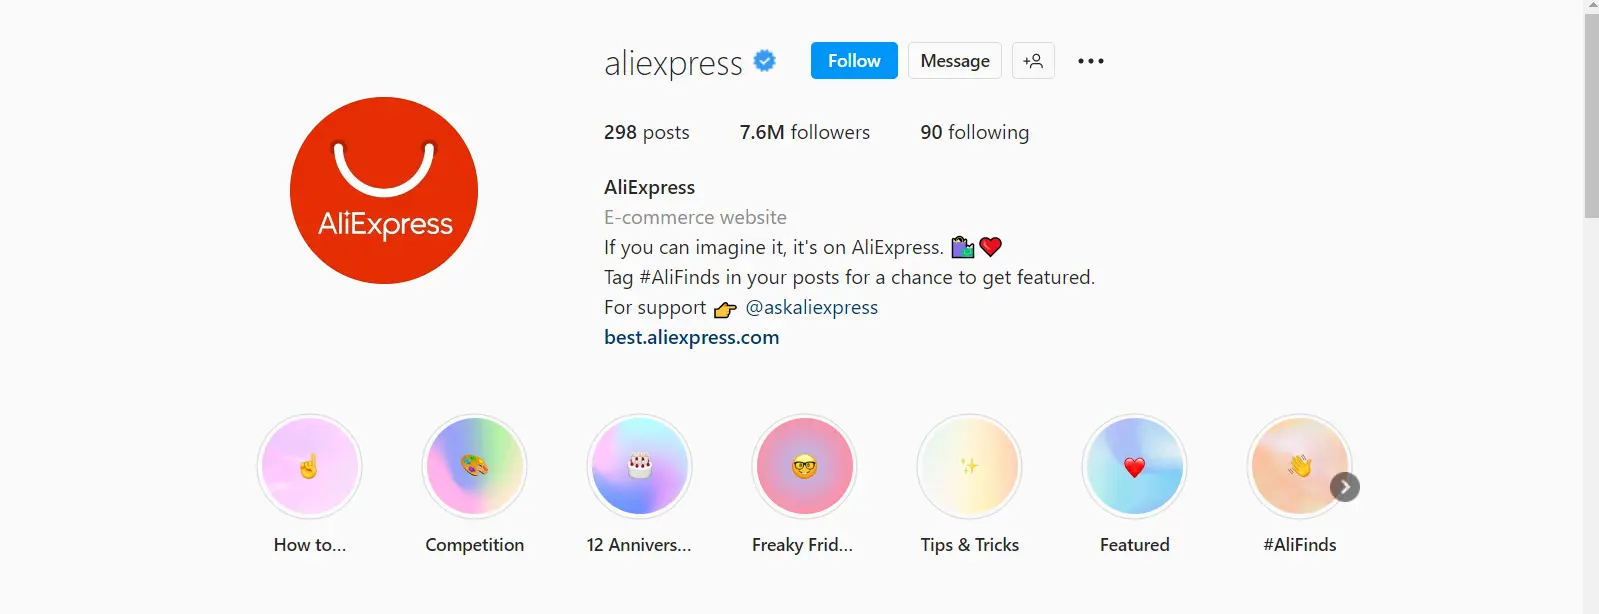 Aliexpress Instagram Page